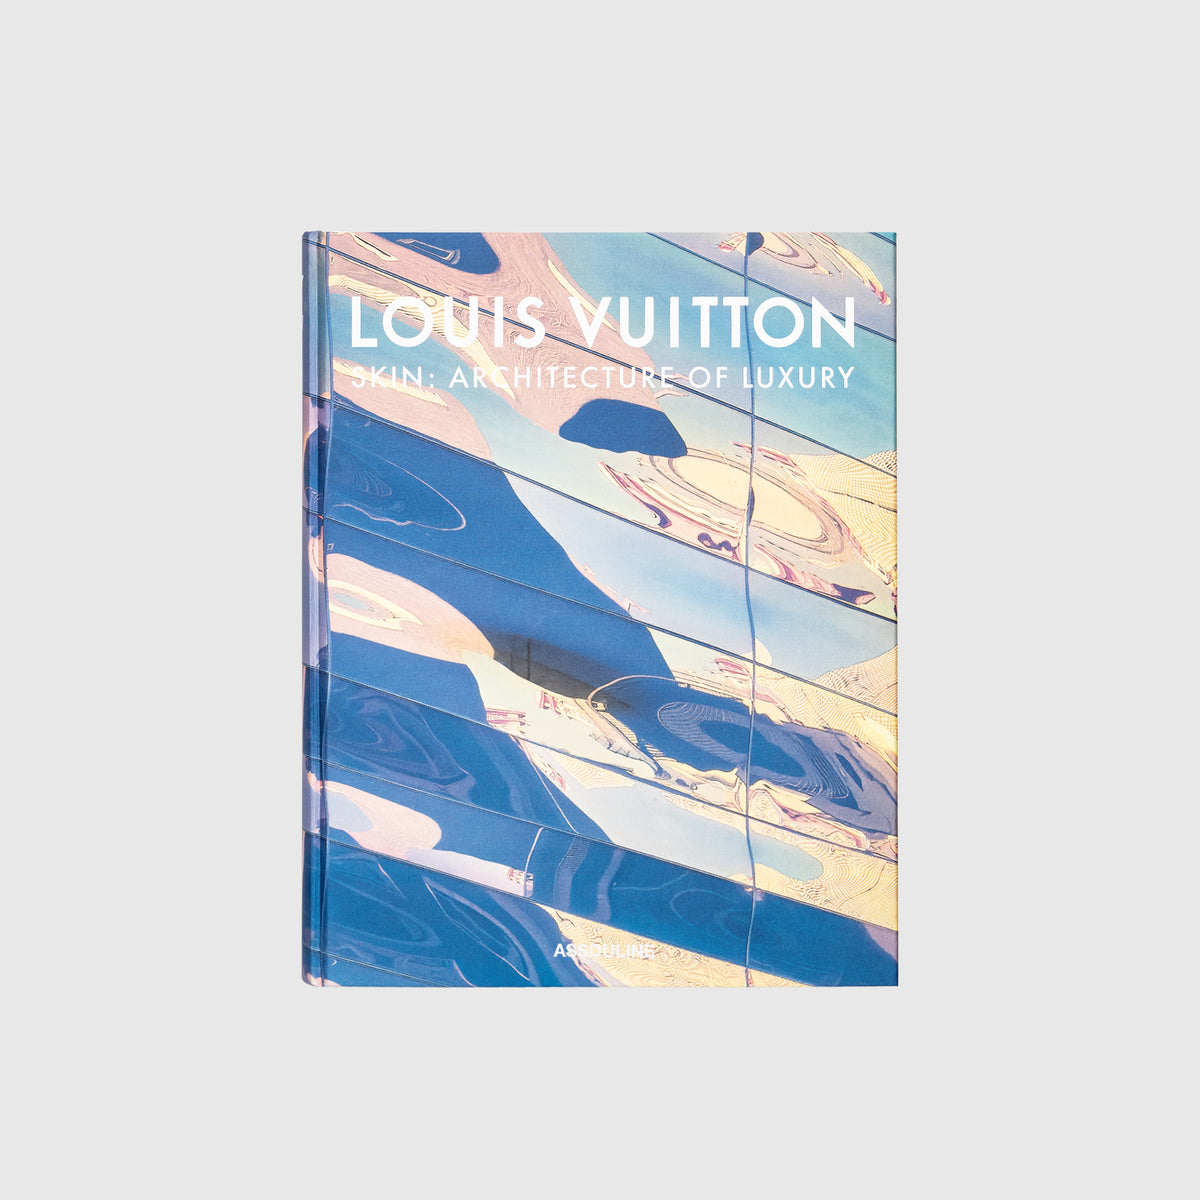 LOUIS VUITTON SKIN: ARCHITECTURE OF LUXURY (PARIS EDITION) – PACKER SHOES